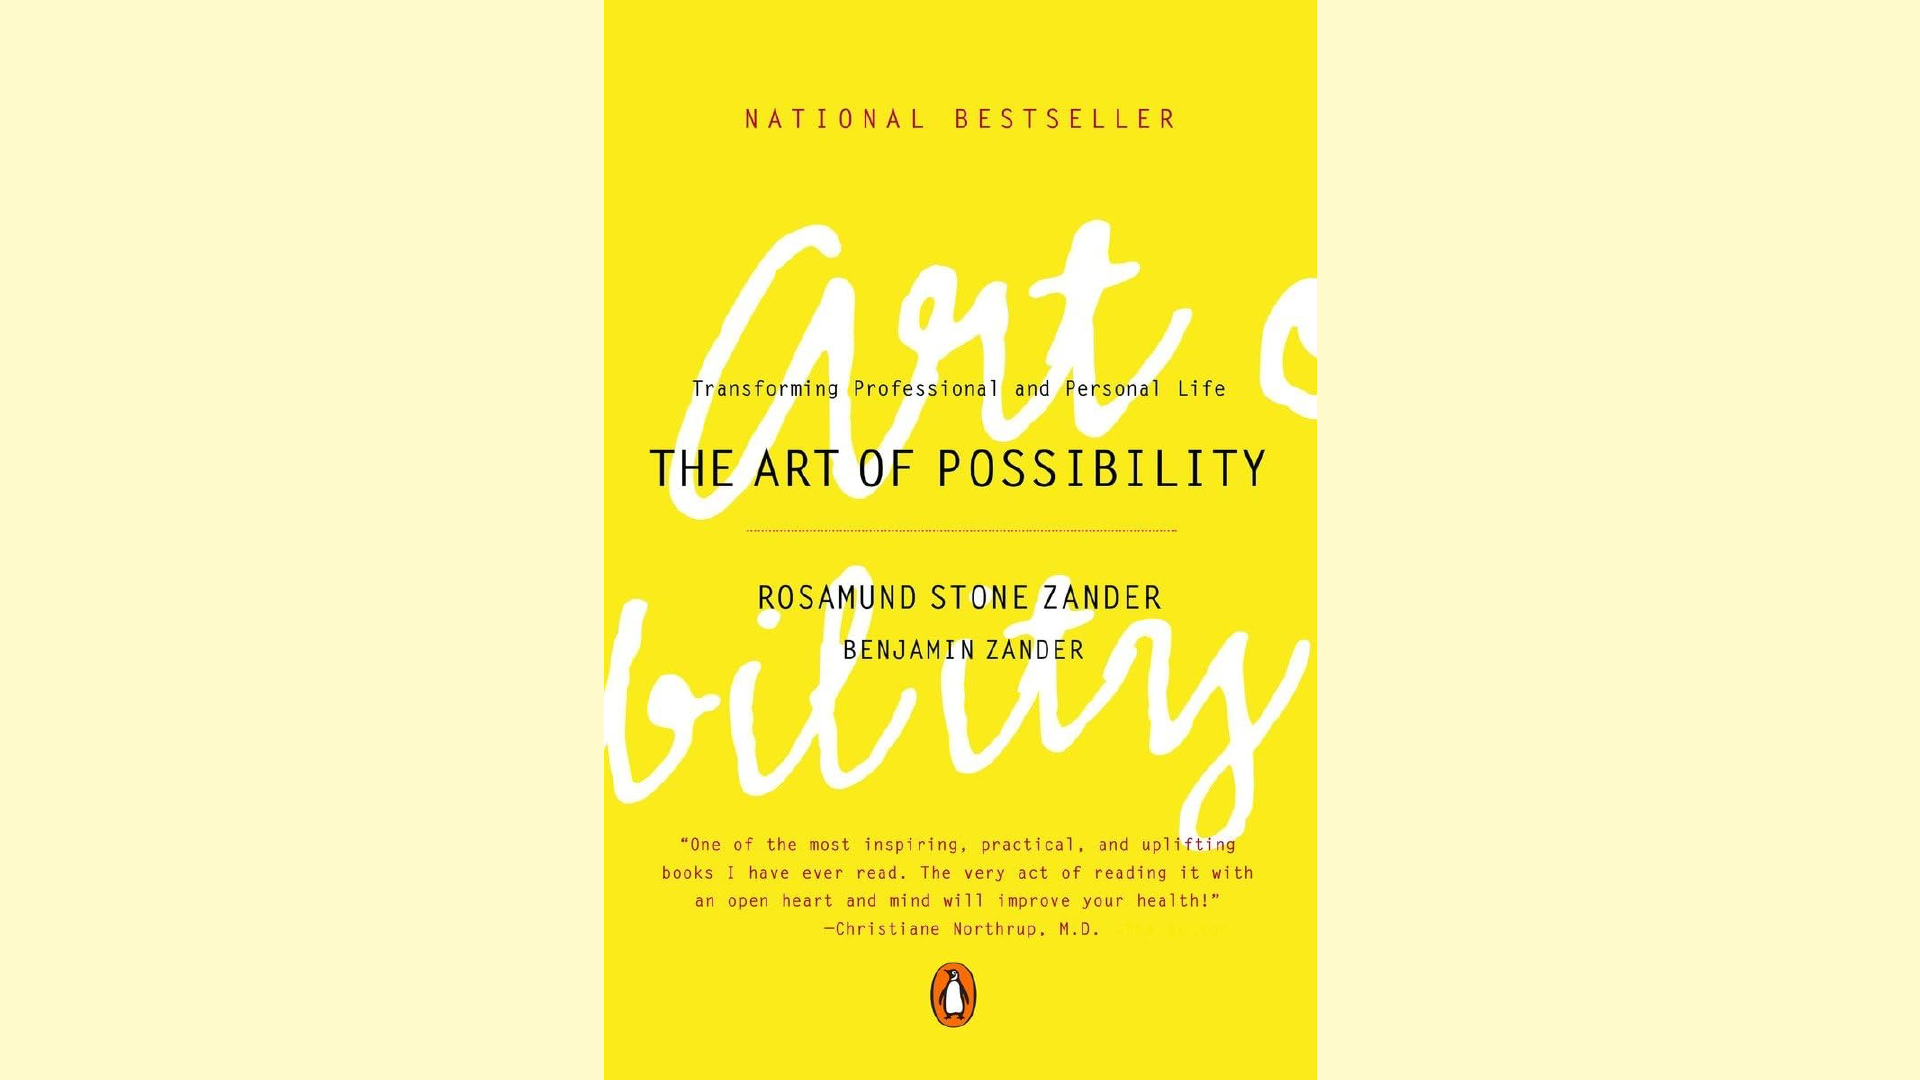 Summary: The Art of Possibility by Rosamund Stone Zander and Benjamin Zander